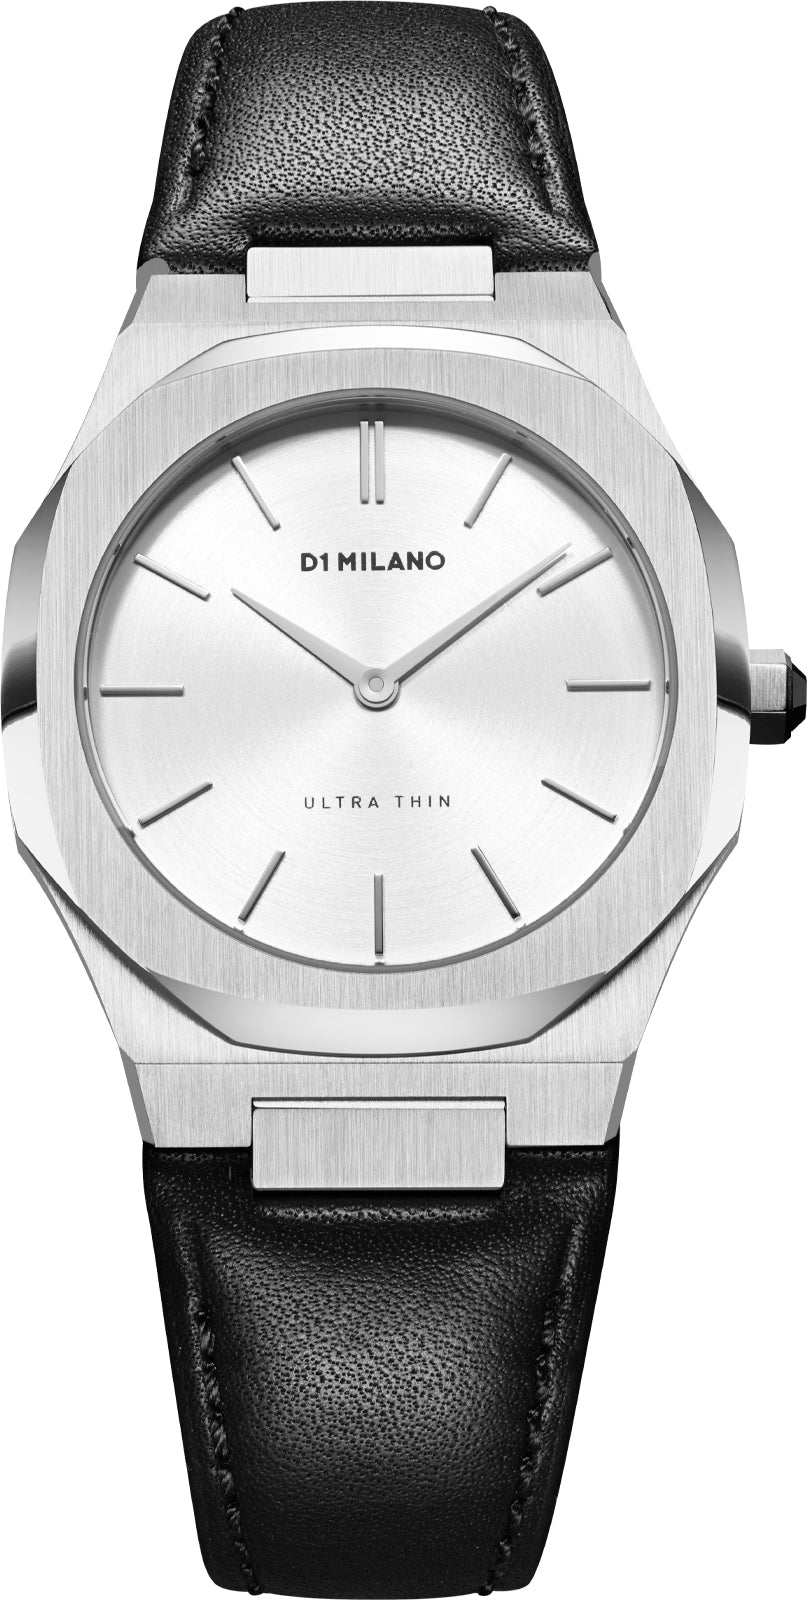 Photos - Wrist Watch Milano D1  Watch Ultra Thin - Silver DLM-060 